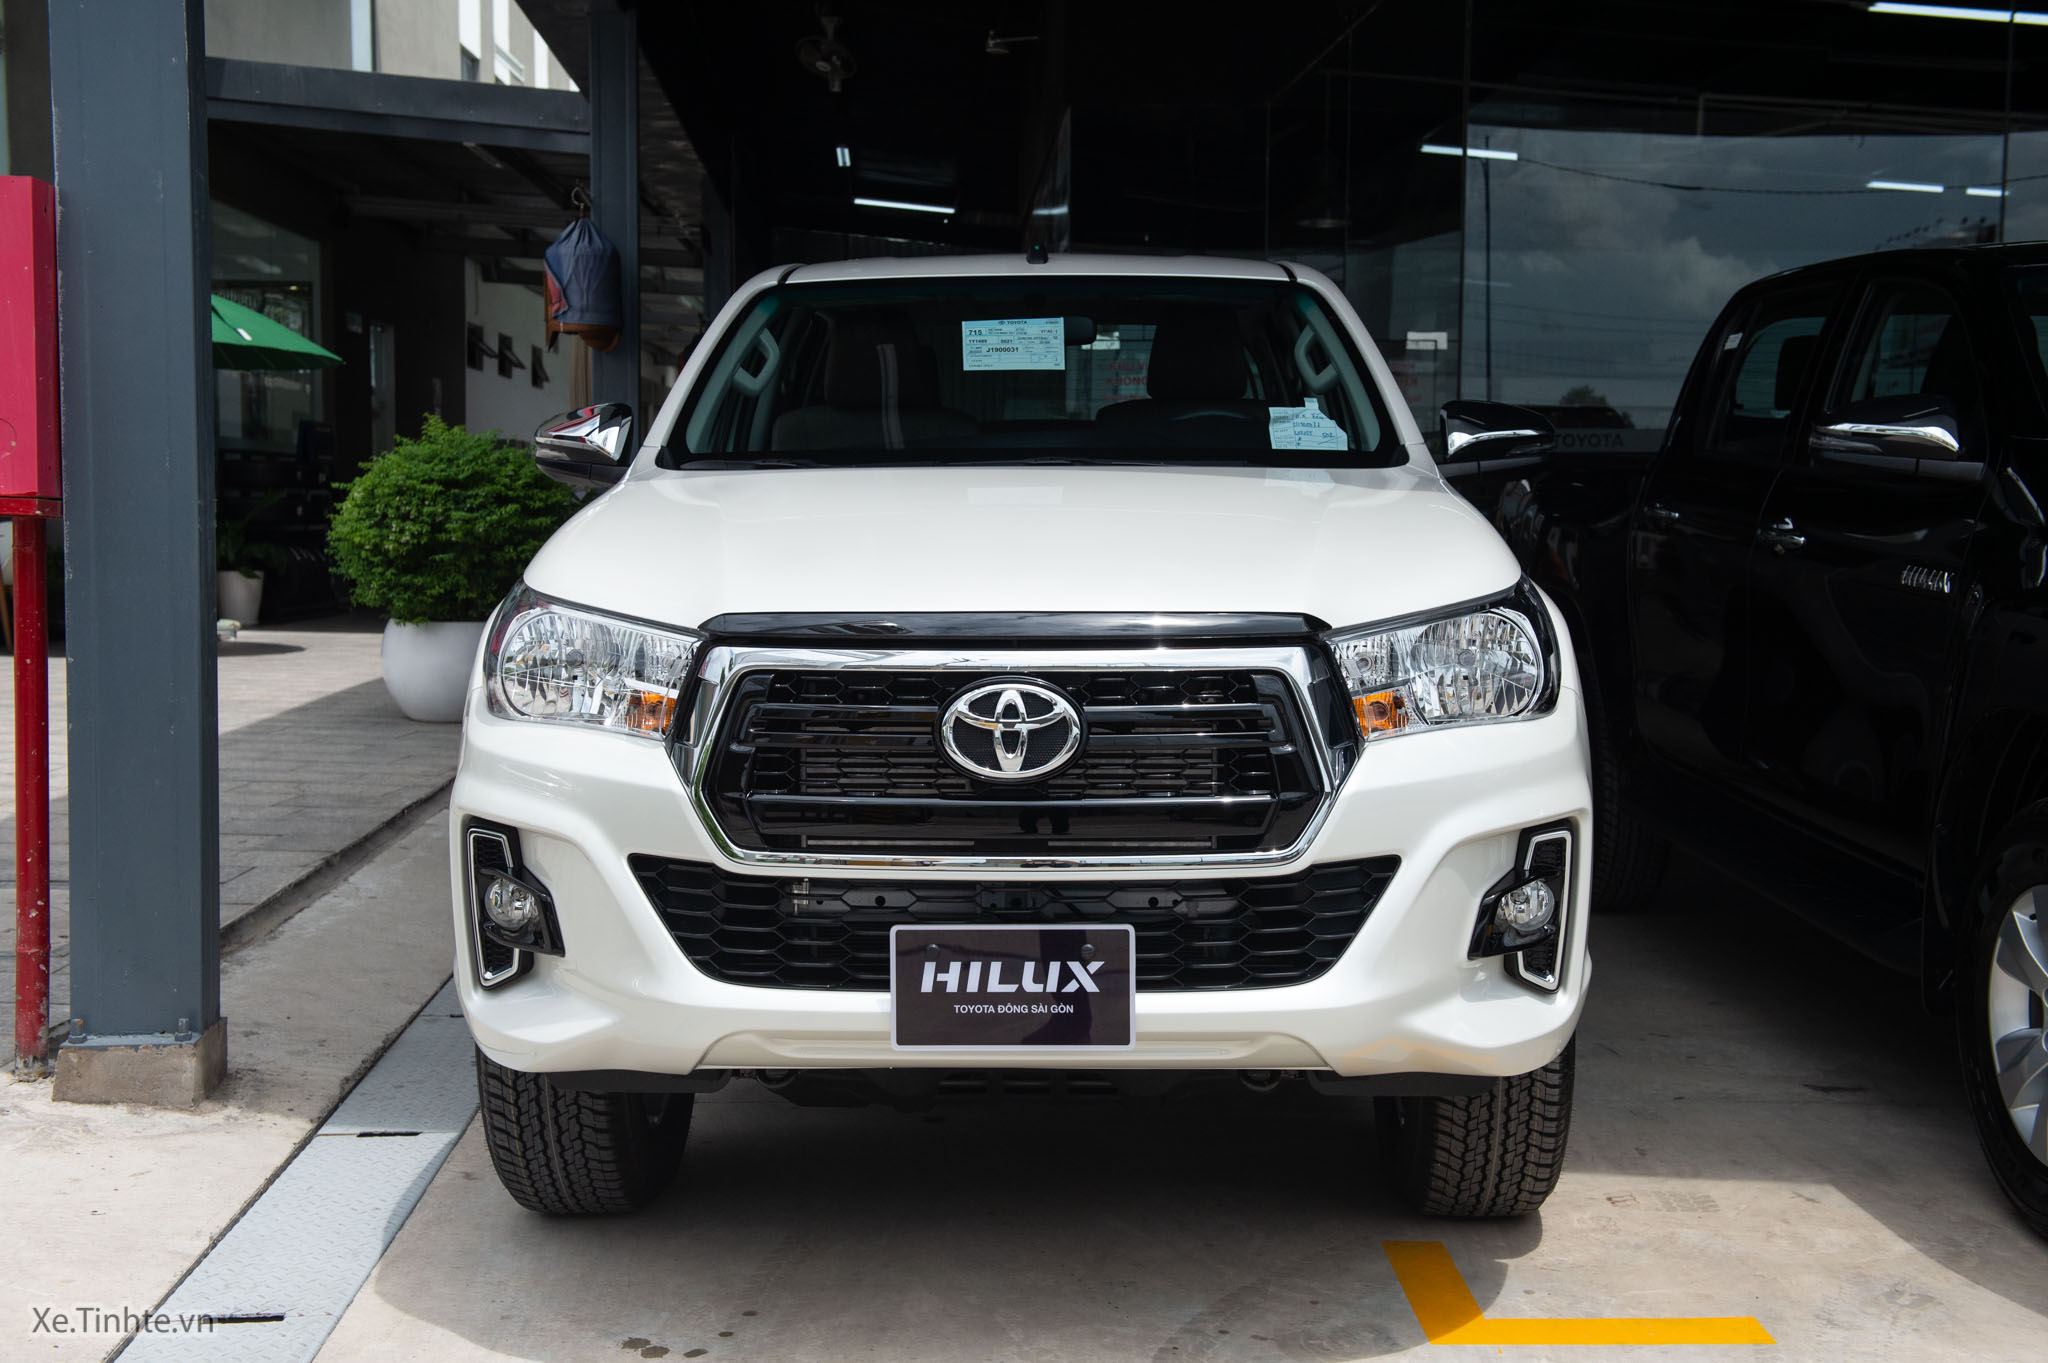 Toyota_Hilux 2018_Xe.tinhte.vn-3291.jpg